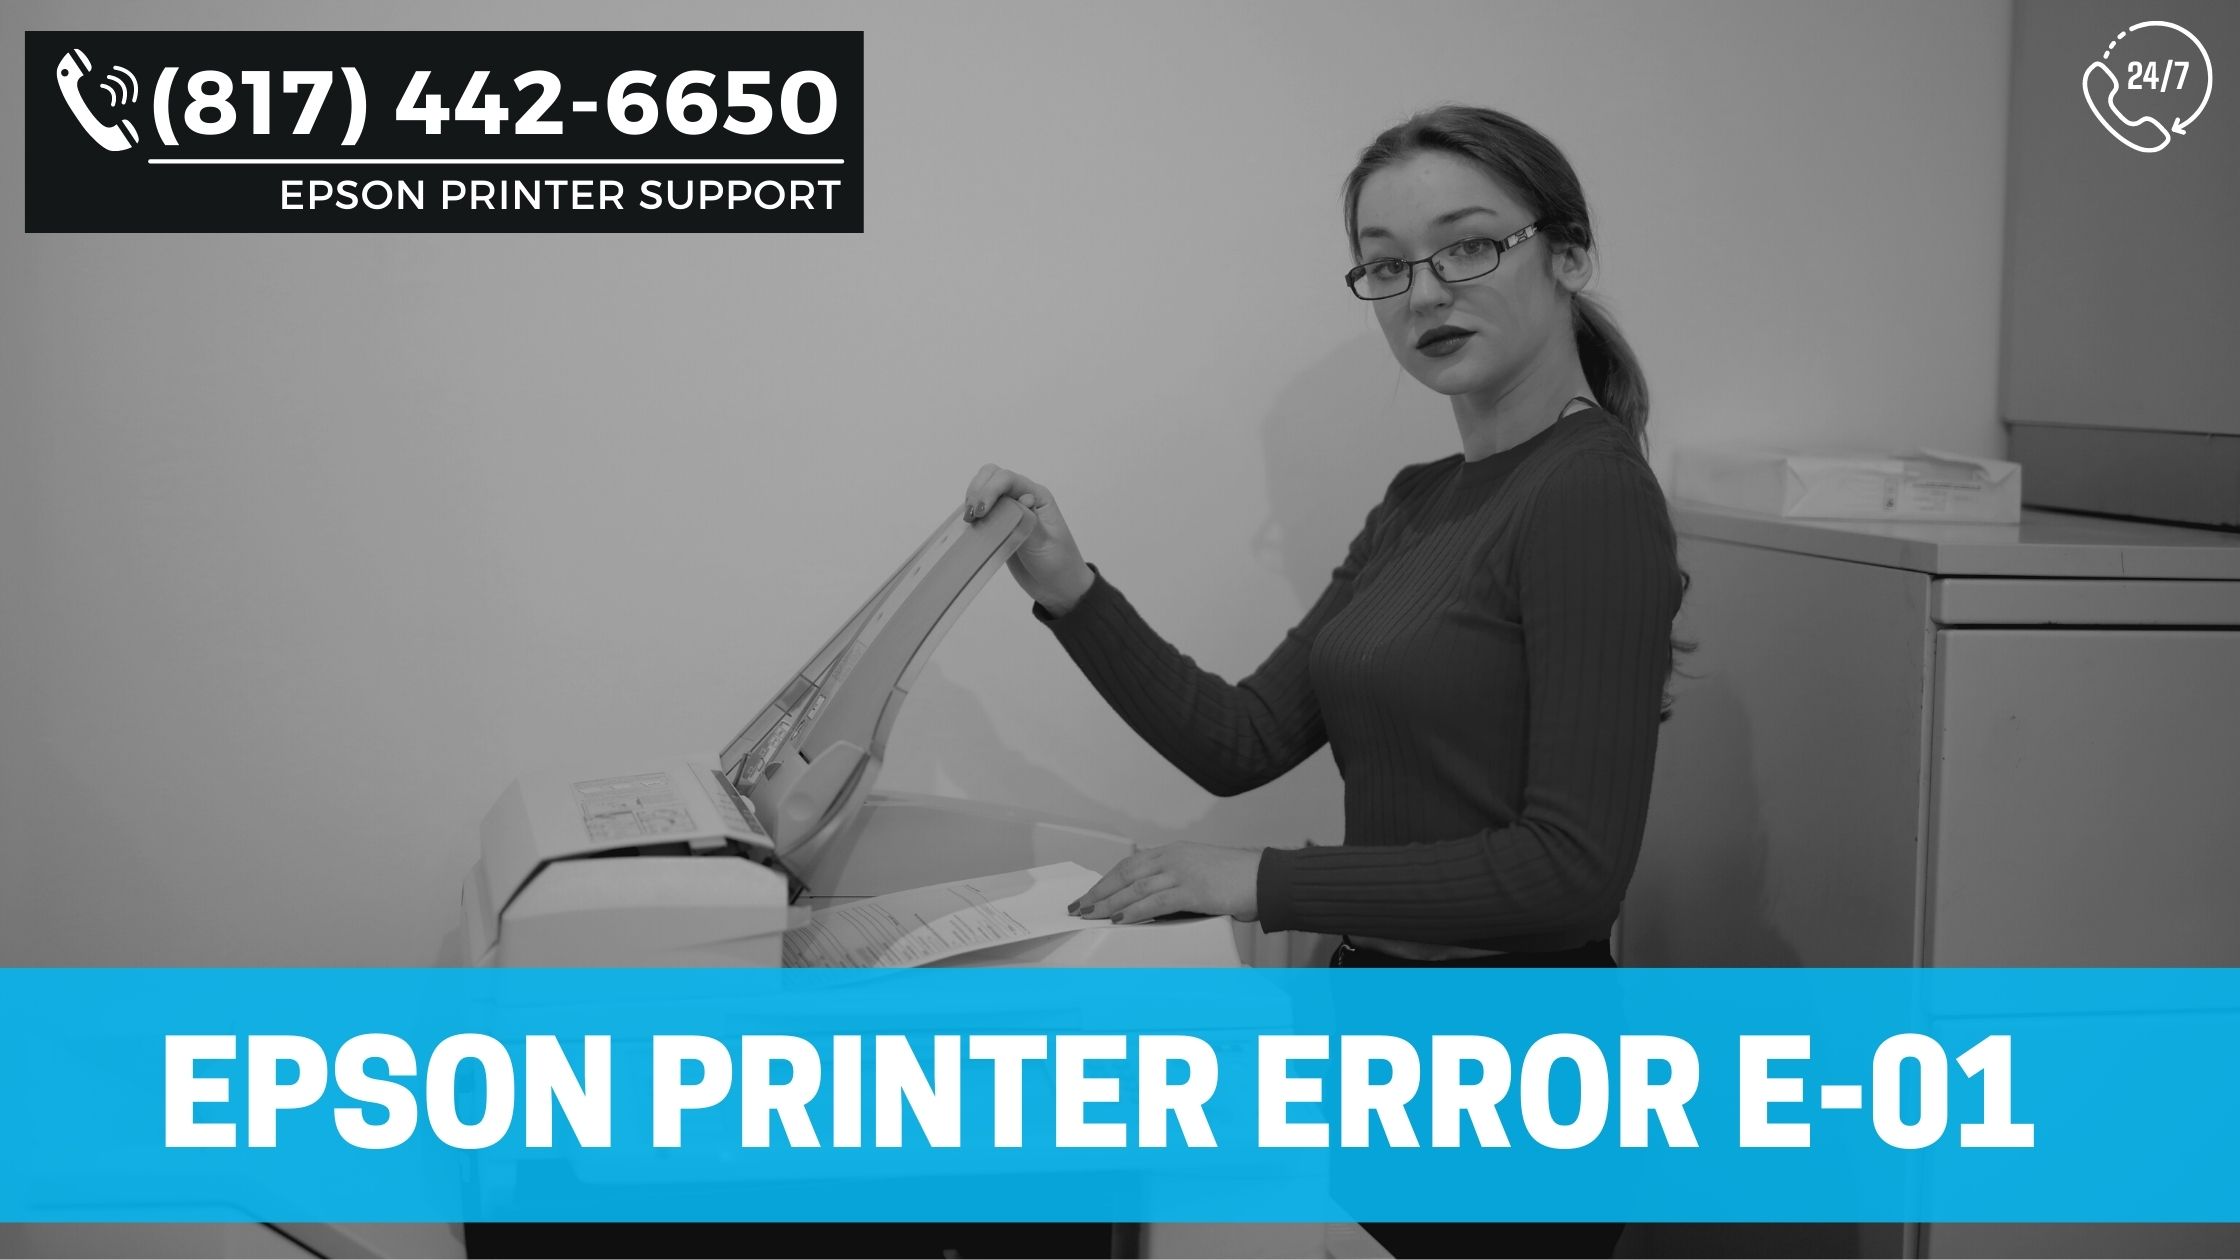 Epson printer error e-01 | Epson support (817) 442-6650